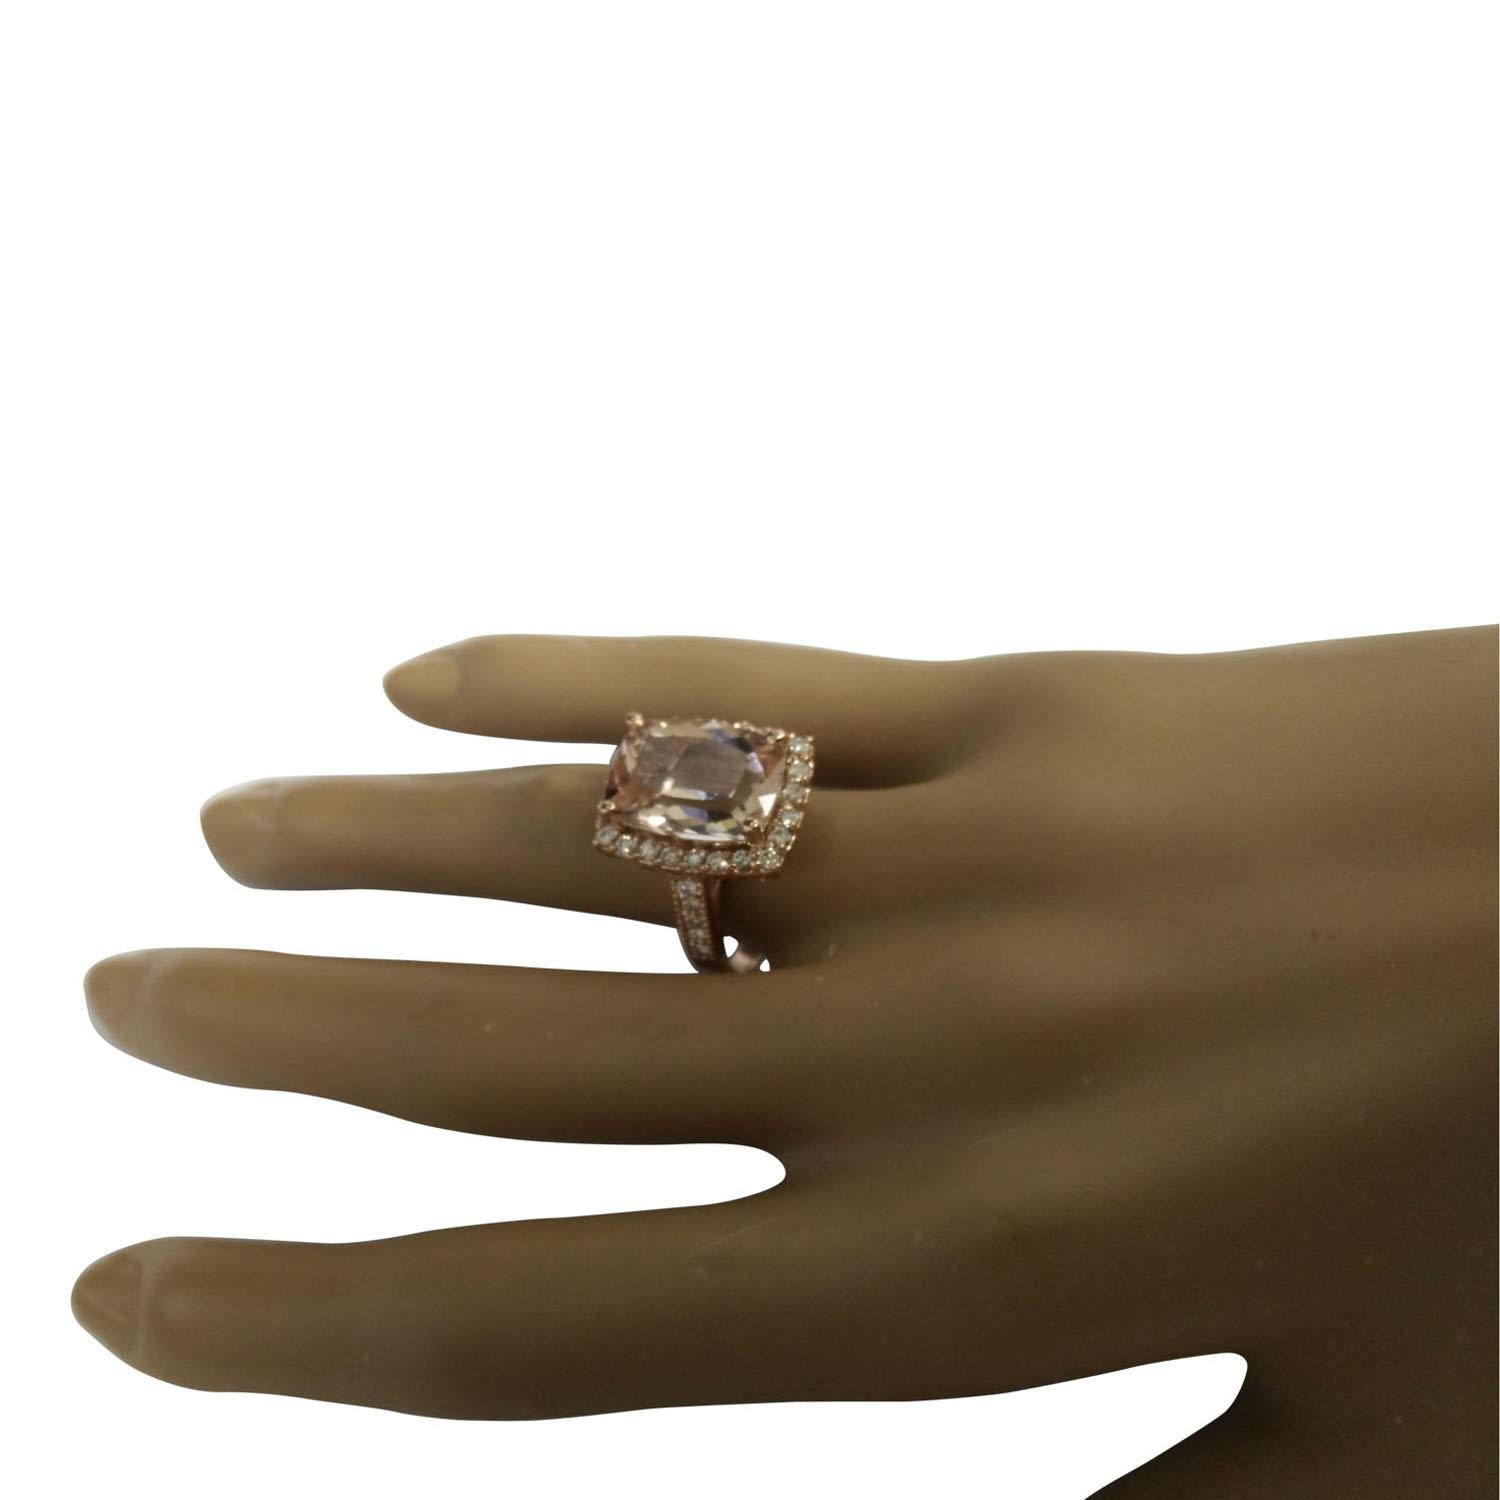 7.12 Carat Natural Morganite 14 Karat Solid Rose Gold Diamond Ring
Stamped: 14K 
Total Ring Weight: 5.7 Grams 
Morganite Weight: 6.32 Carat (14.00x10.00 Millimeters) 
Diamond Weight: 0.80 Carat (F-G Color, VS2-SI1 Clarity )
Quantity: 34
Face